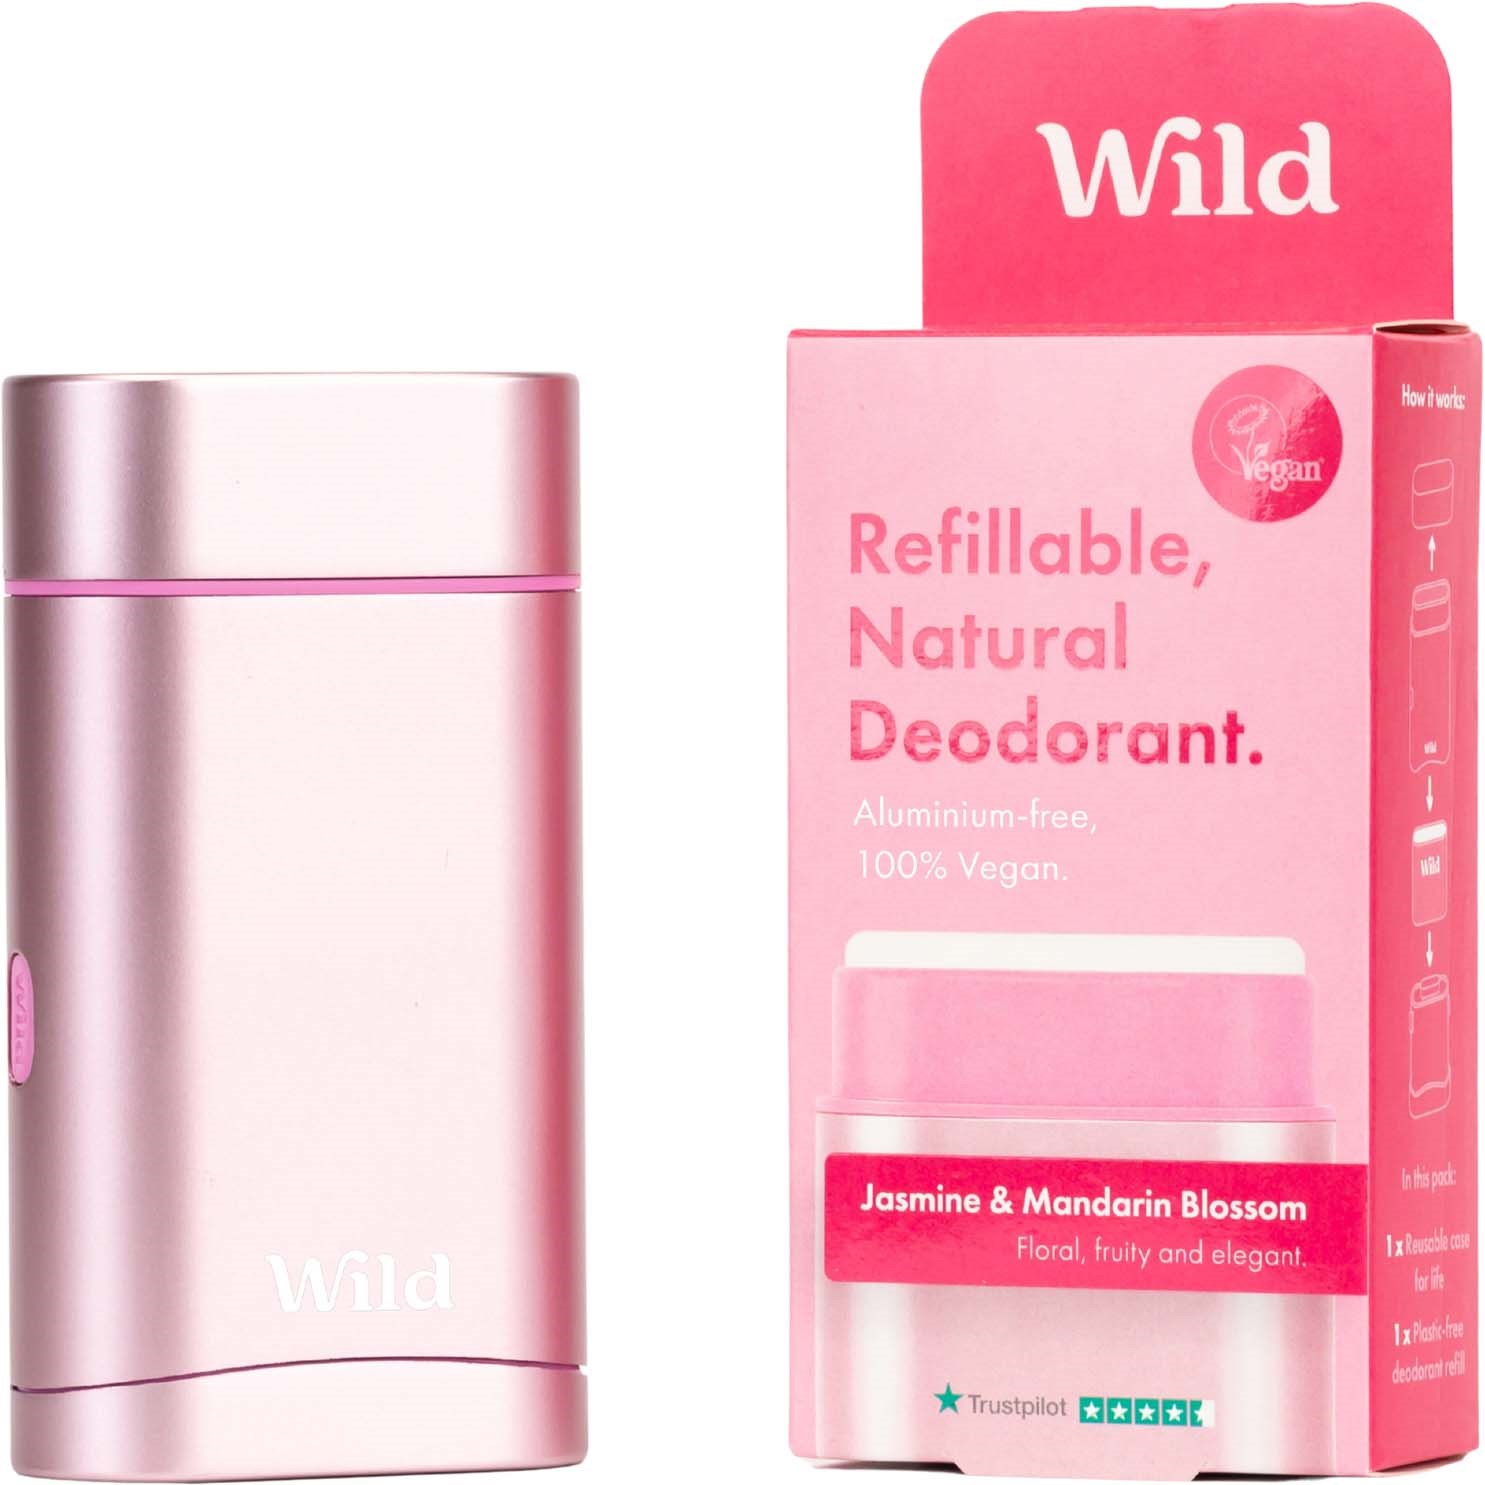 Bilde av Wild Refillable, Natural Deodorant Jasmine & Mandarin Blossom 40 G